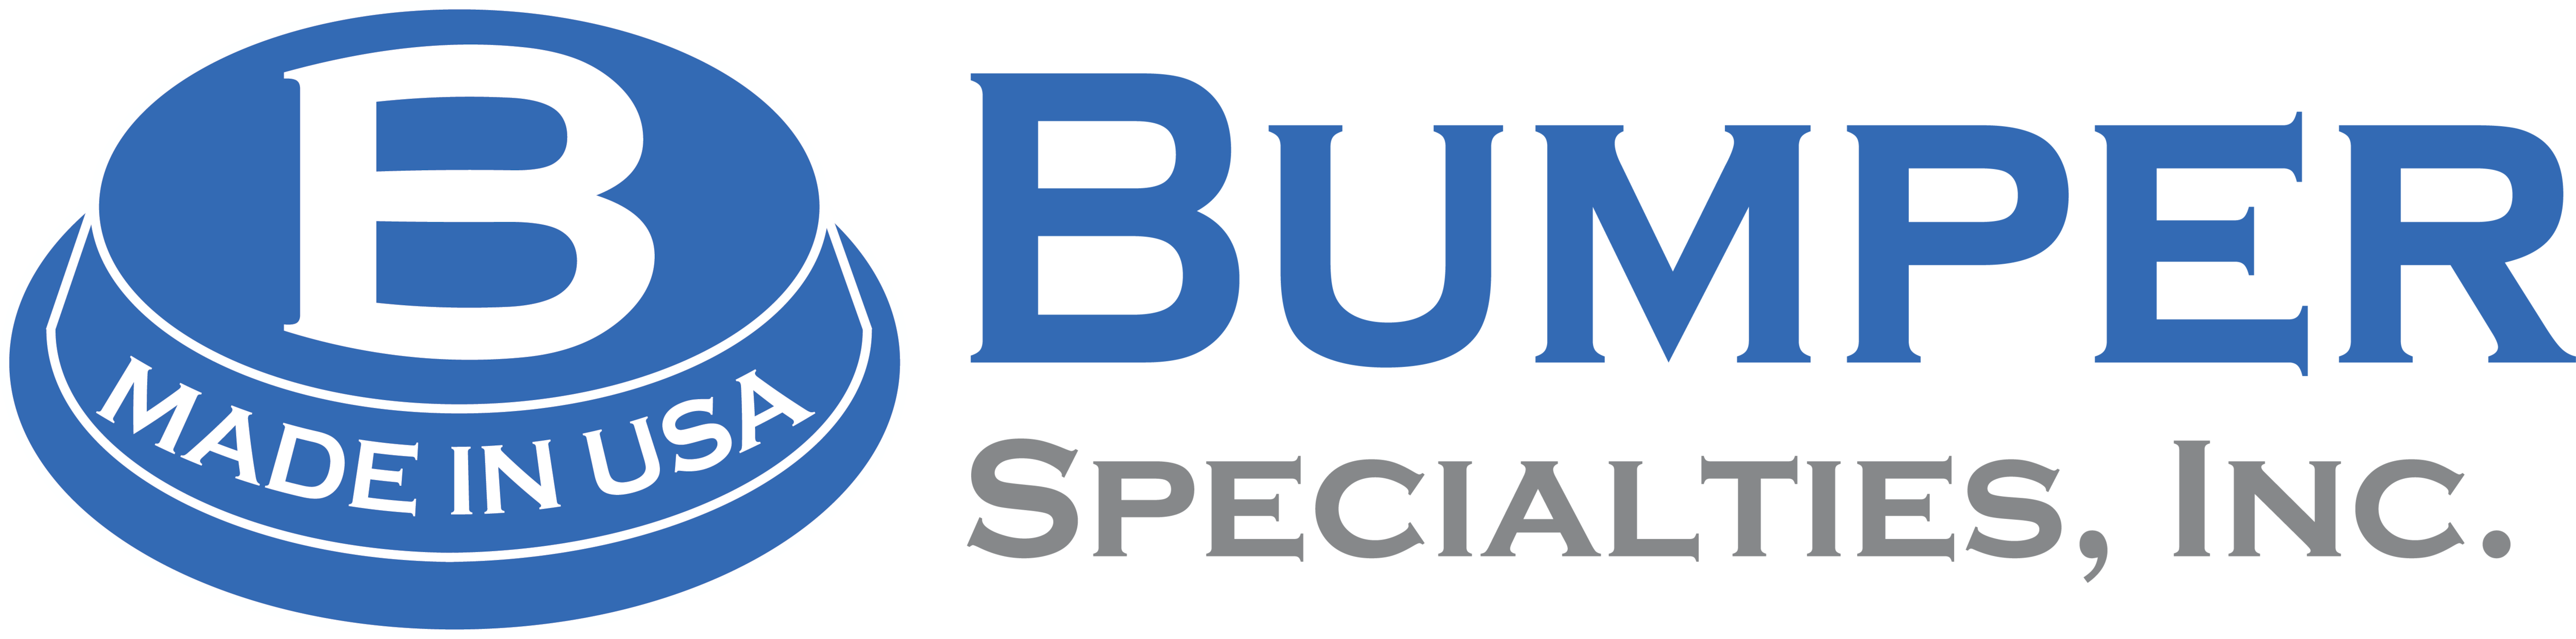 Bumper Specialties, Inc.